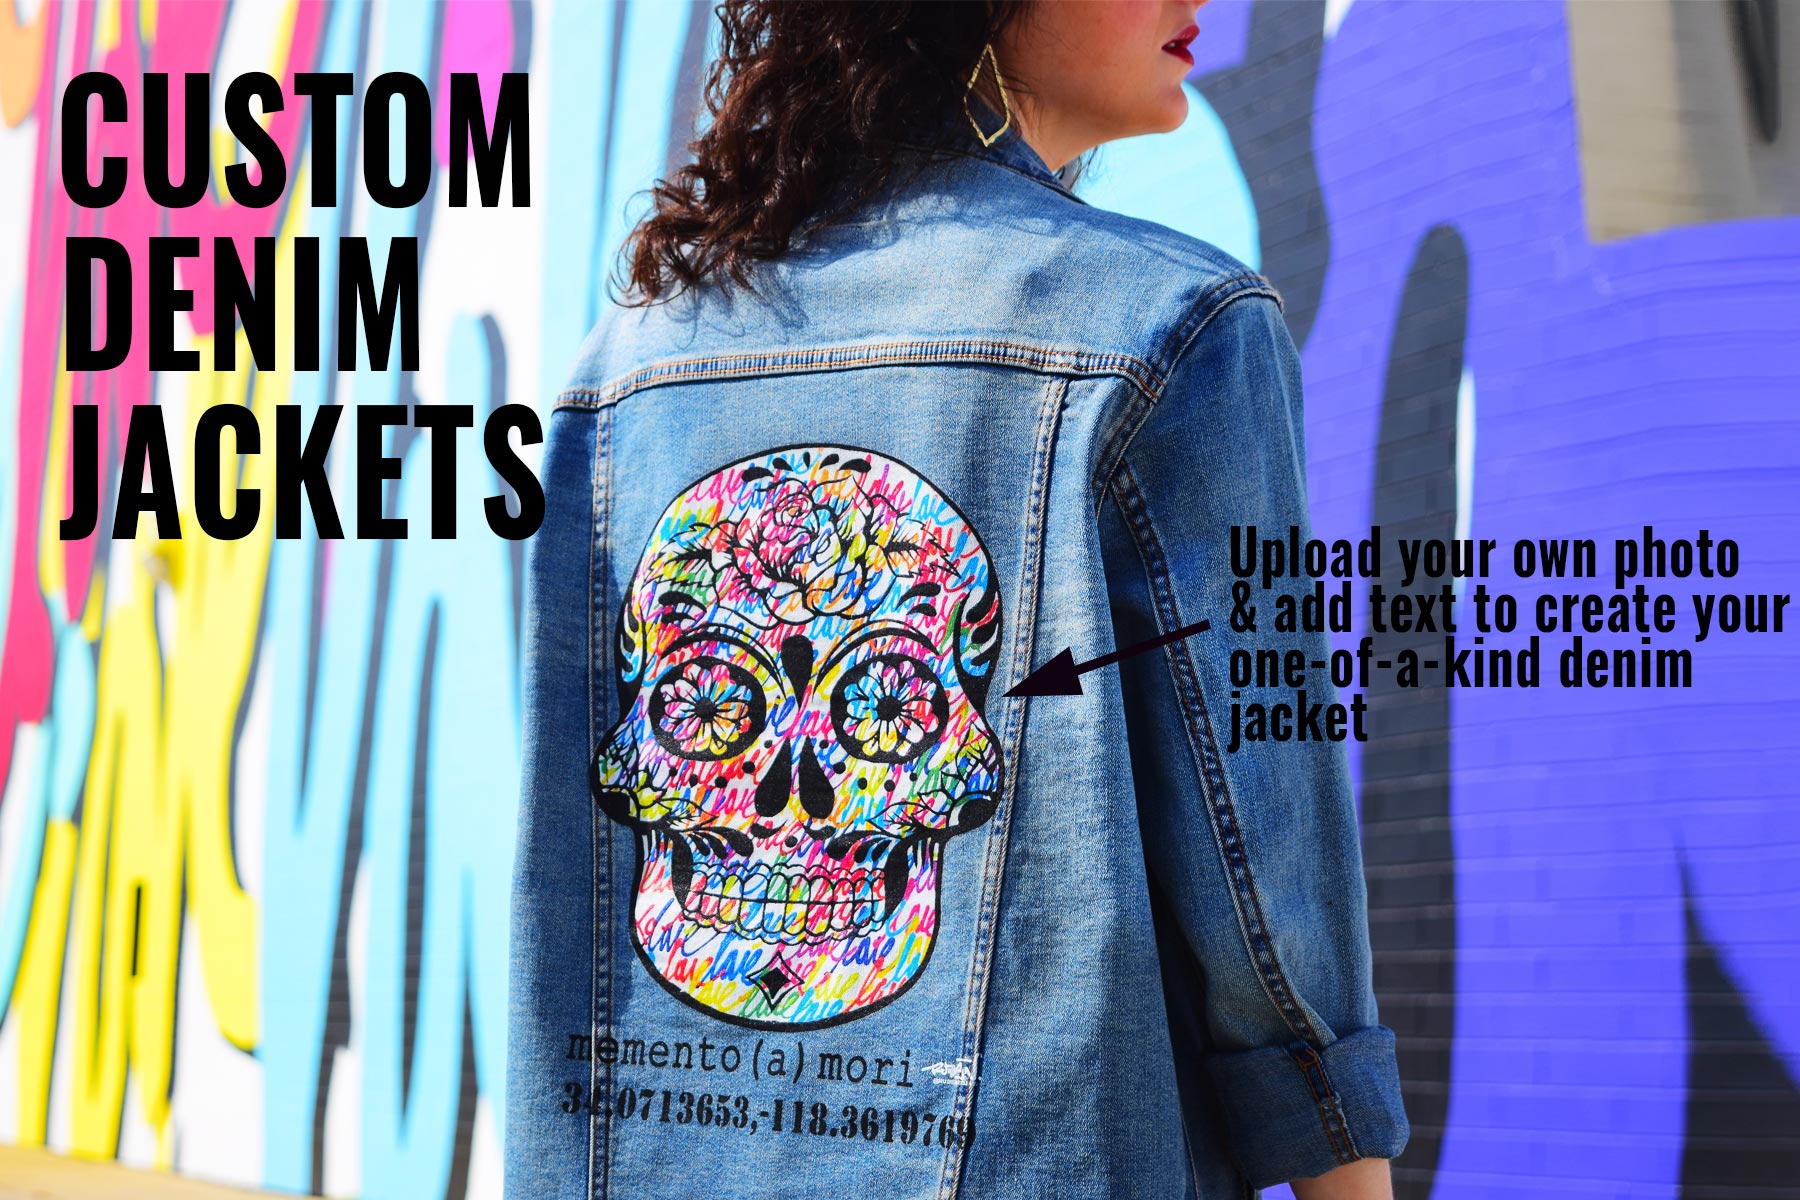 Jacket Art | Diy denim jacket, Painted clothes diy, Jean jacket diy